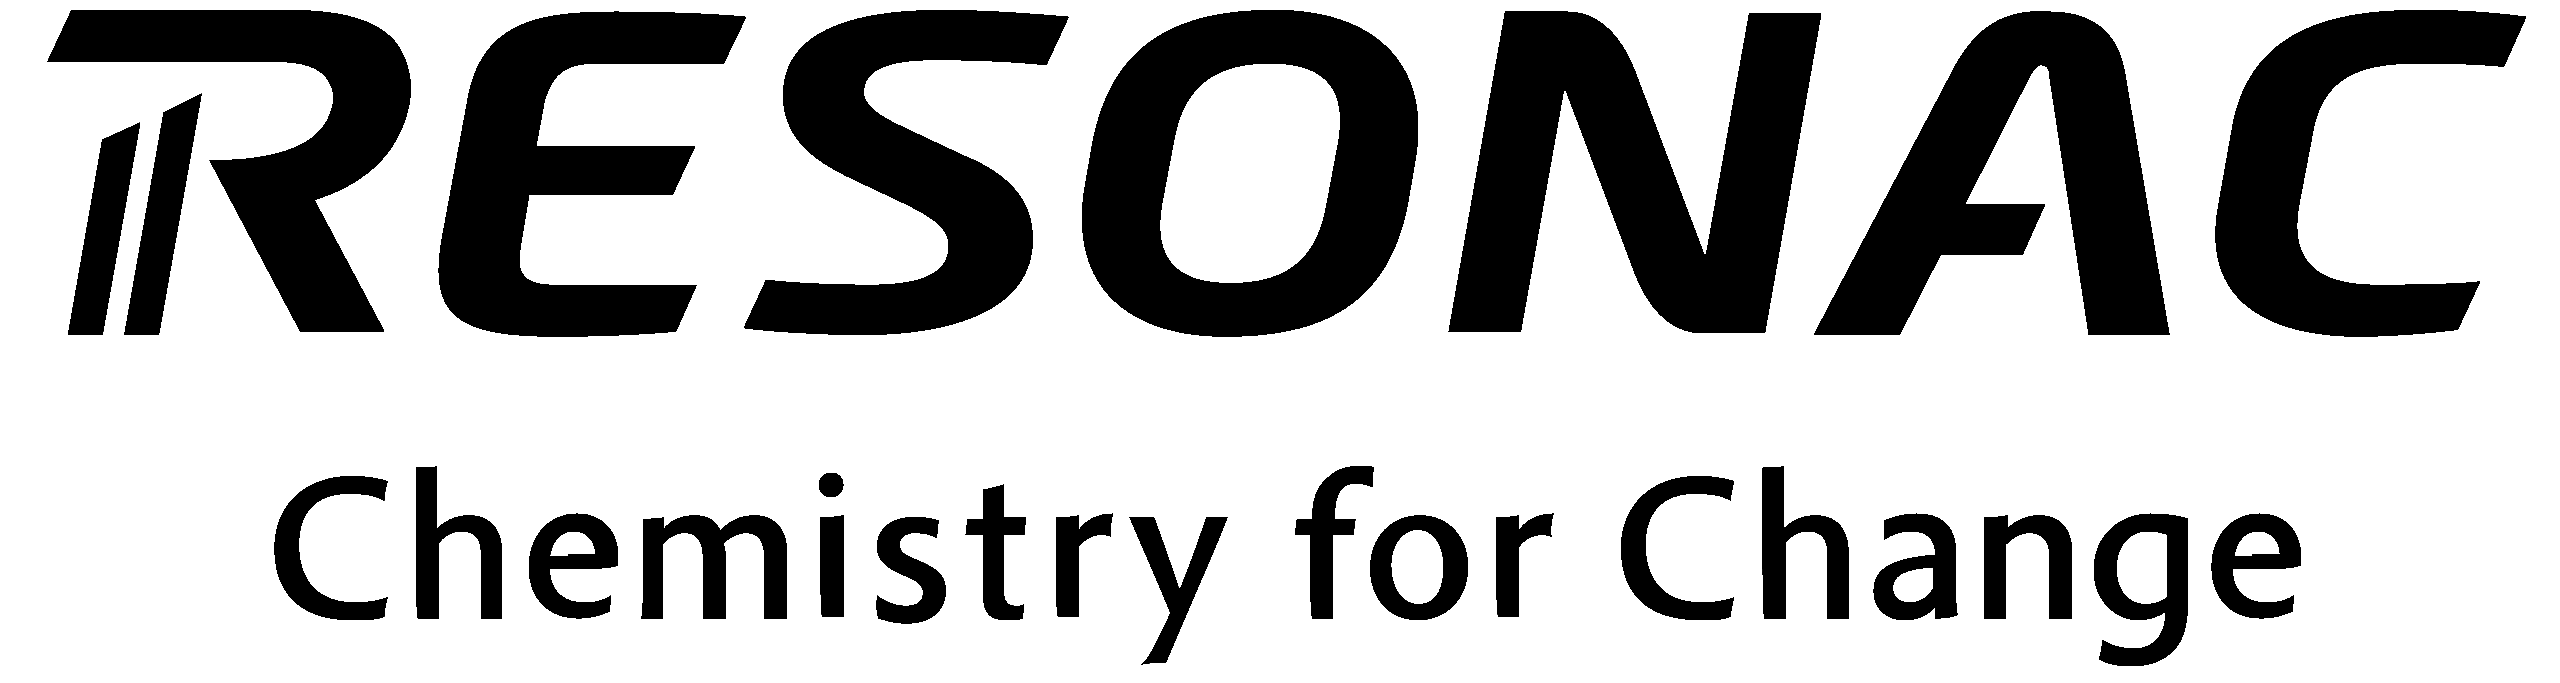 Resonac Logo